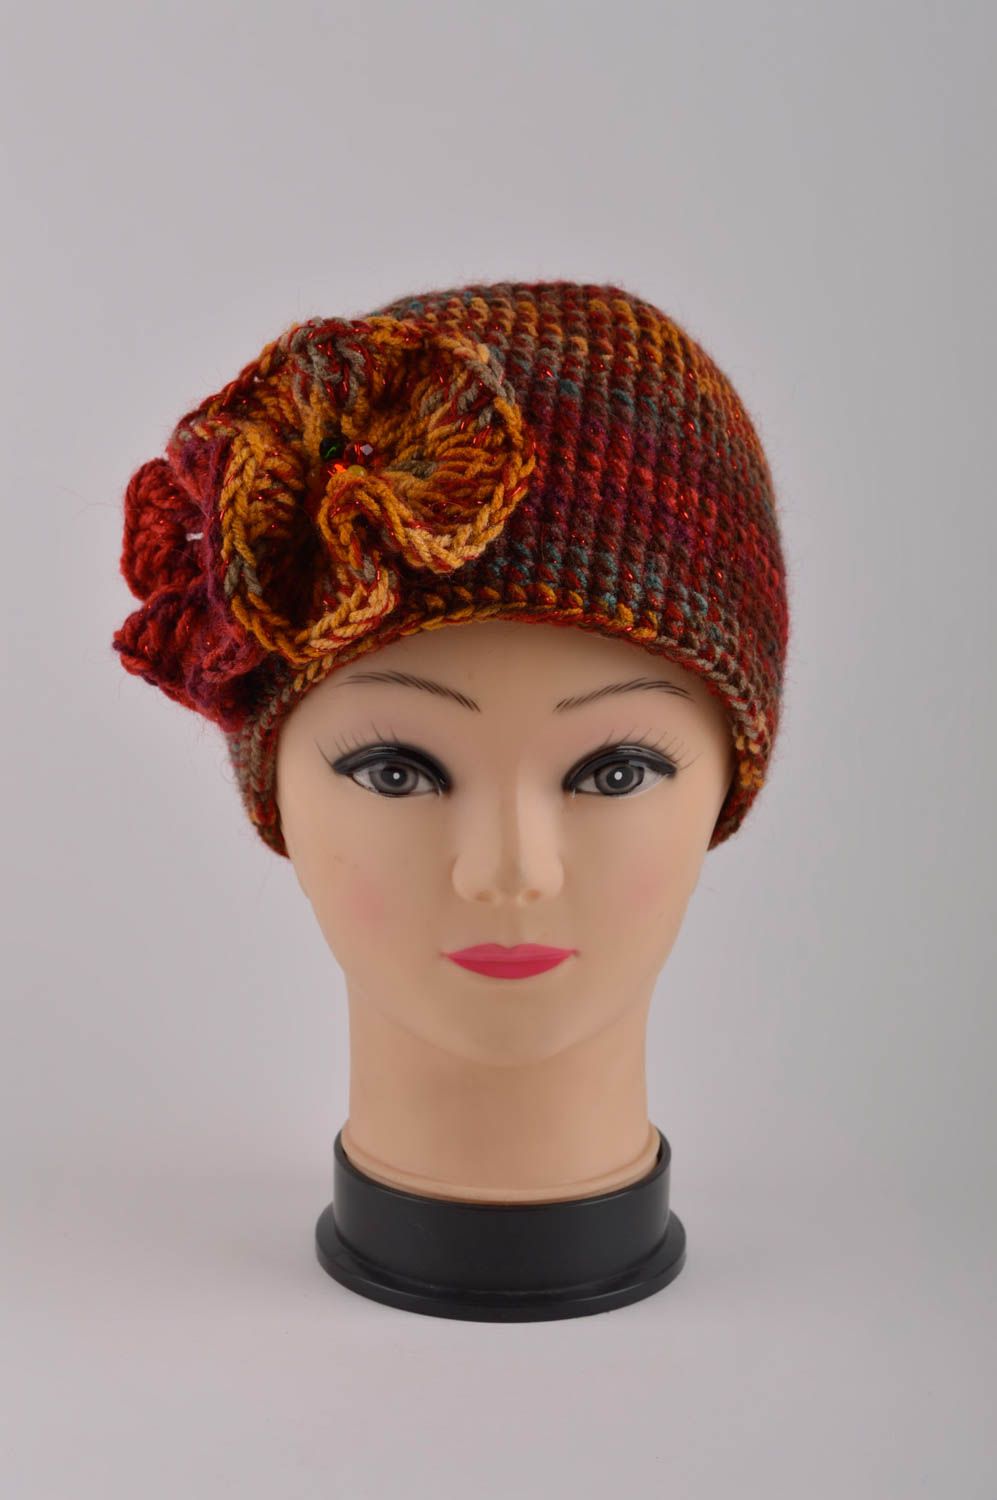 Handmade winter hat crochet hat for women ladies hat designer accessories  photo 3